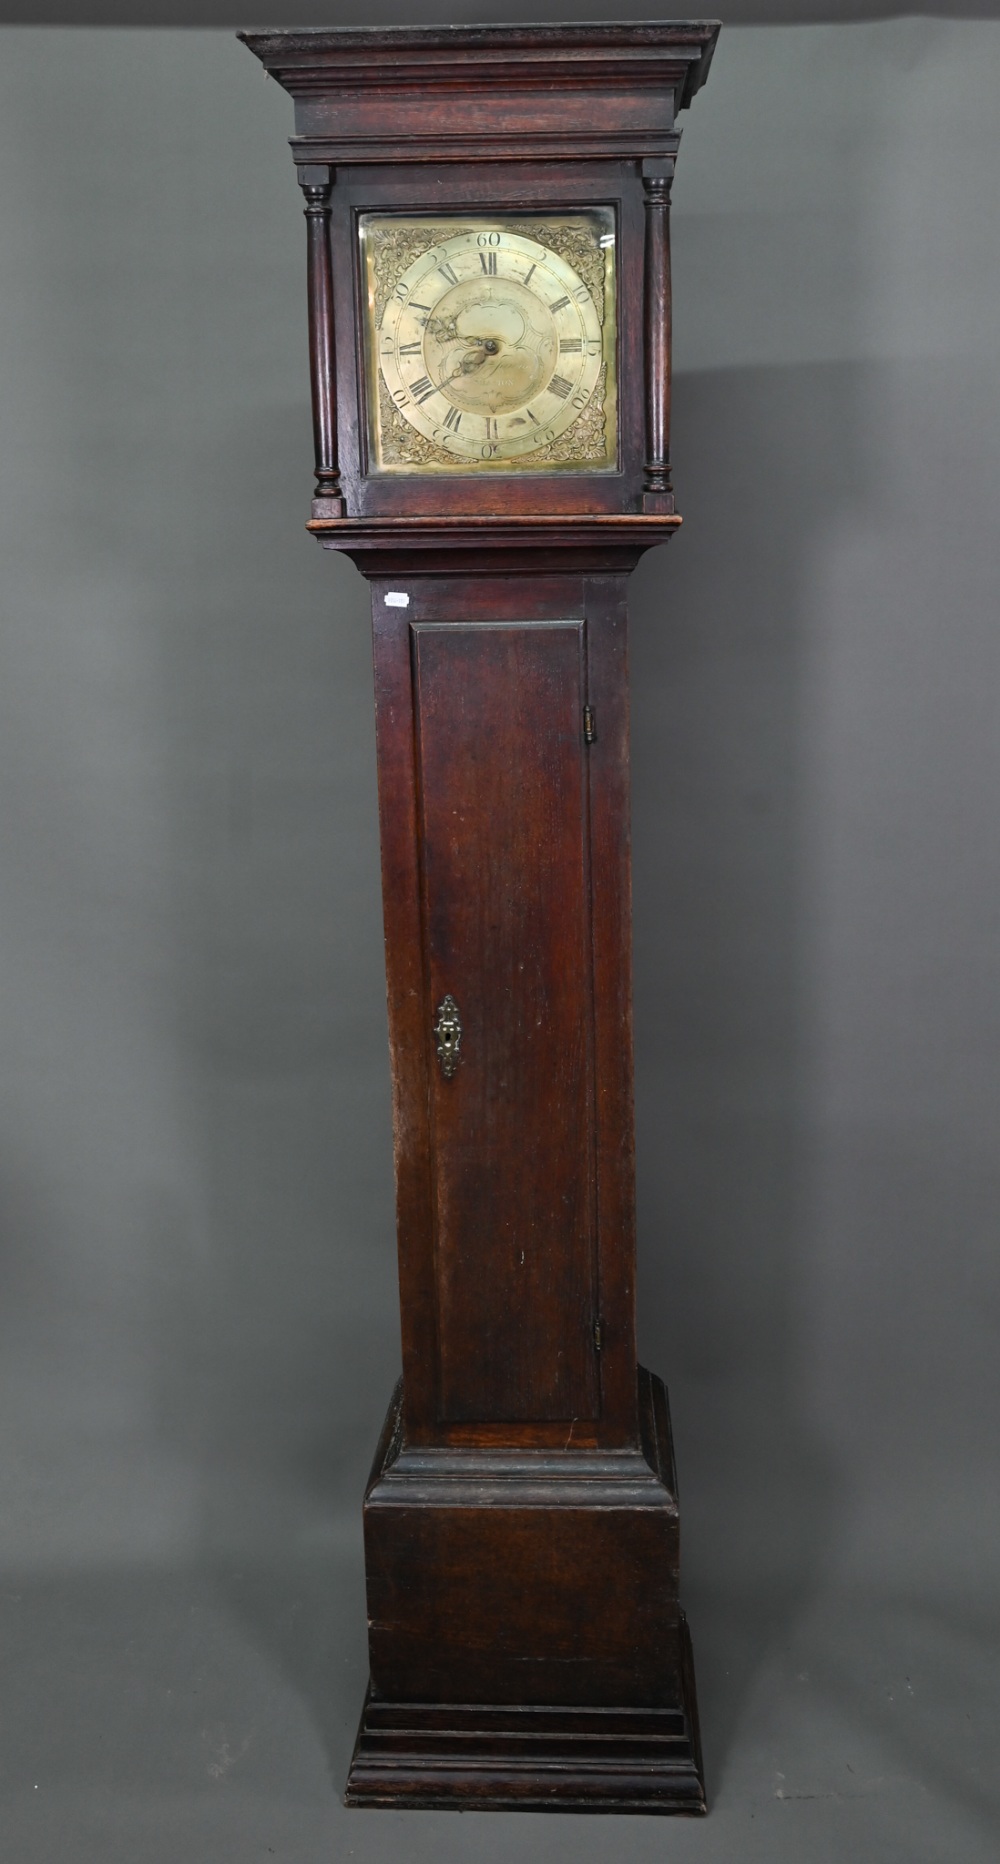 Benjamin James, Shaston, an 18th century oak longcase clock, the 30 hour movement with engraved